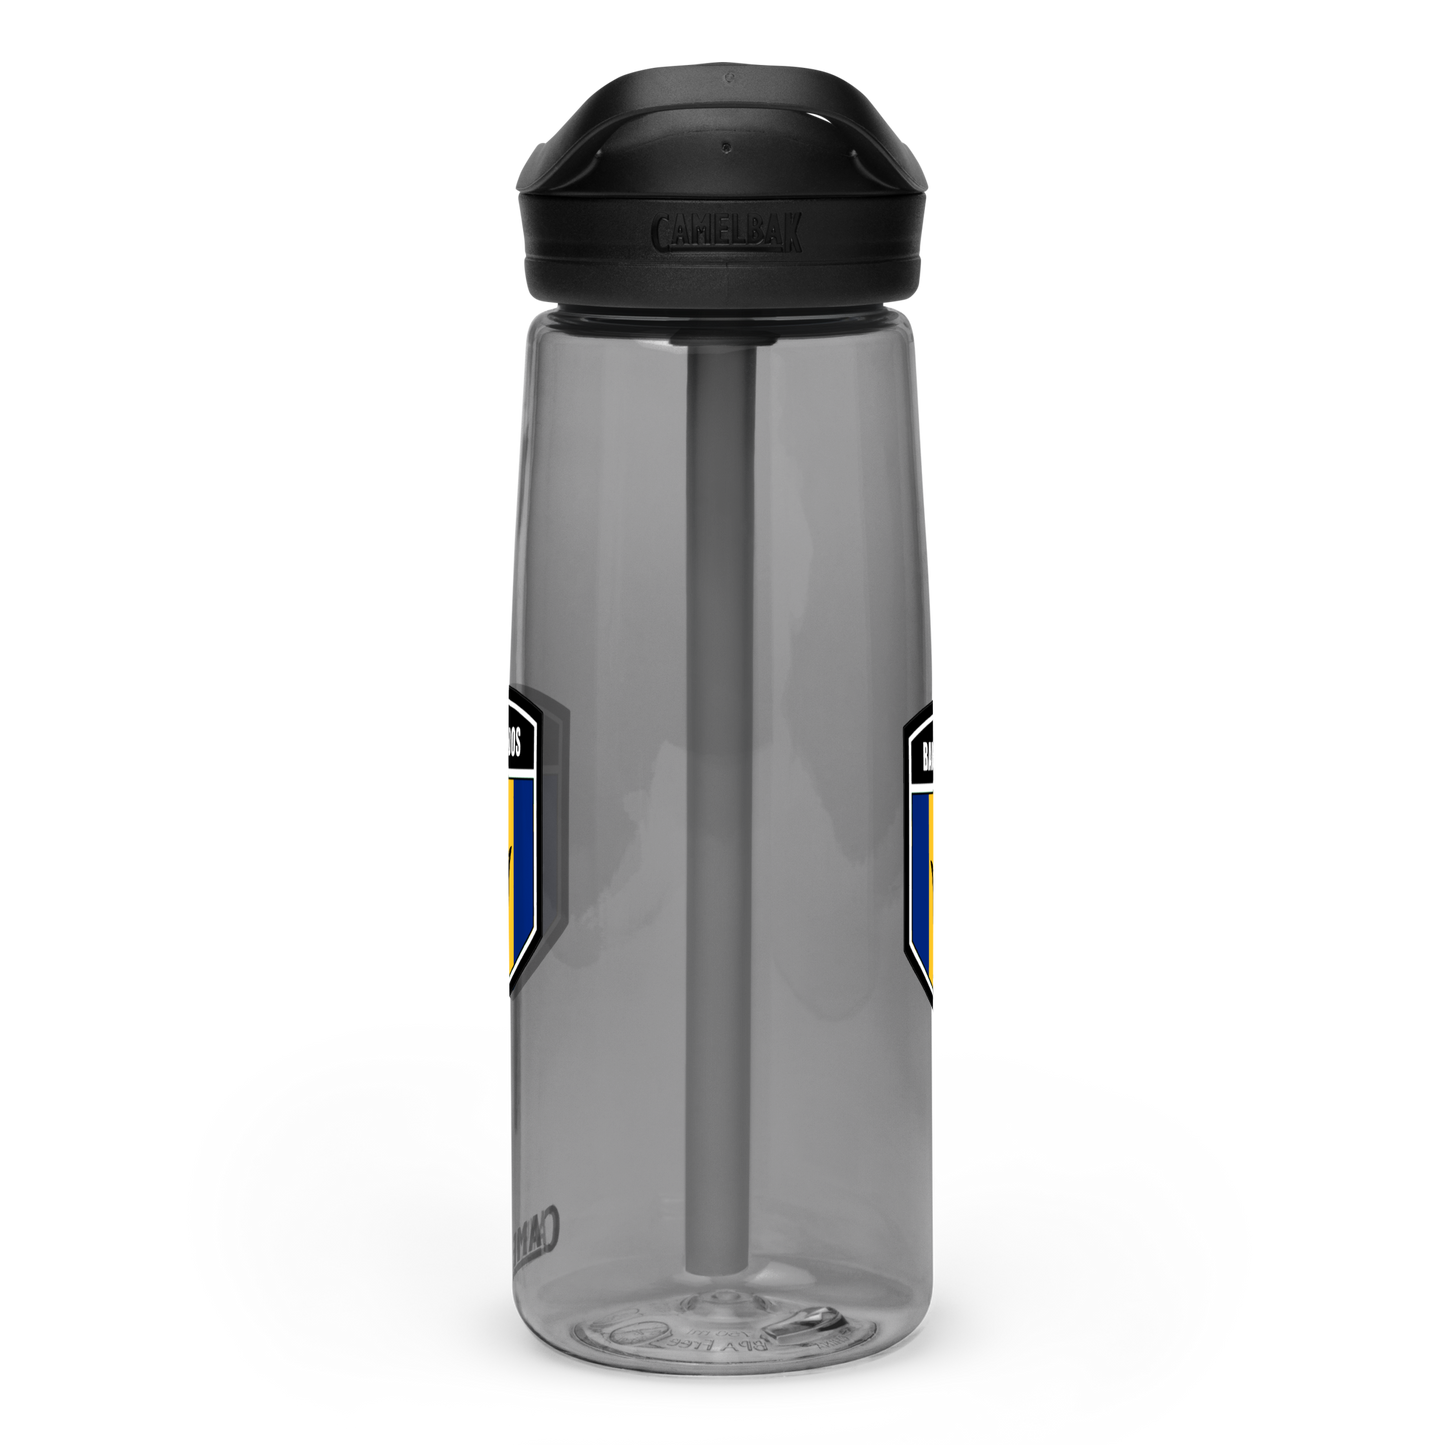 Barbados Sports water bottle